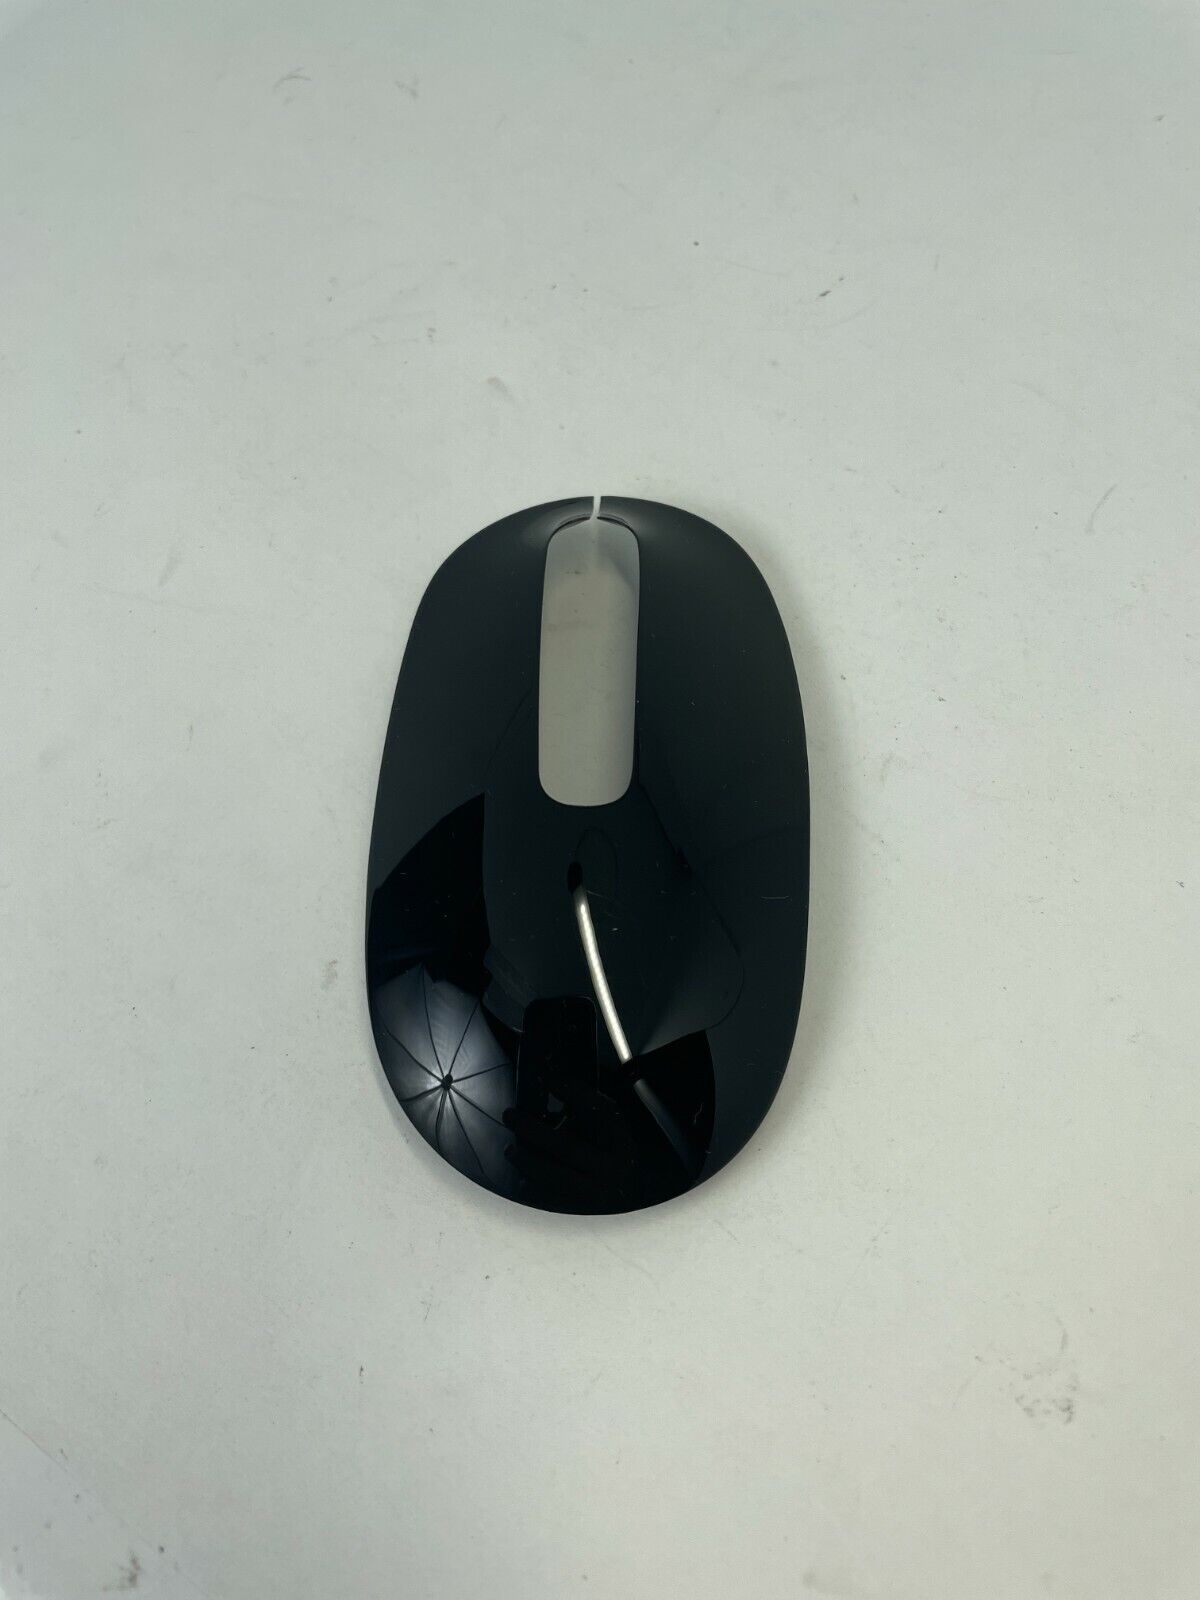 Genuine replacement battery door top for Microsoft Sculpt Comfort Mouse - Black